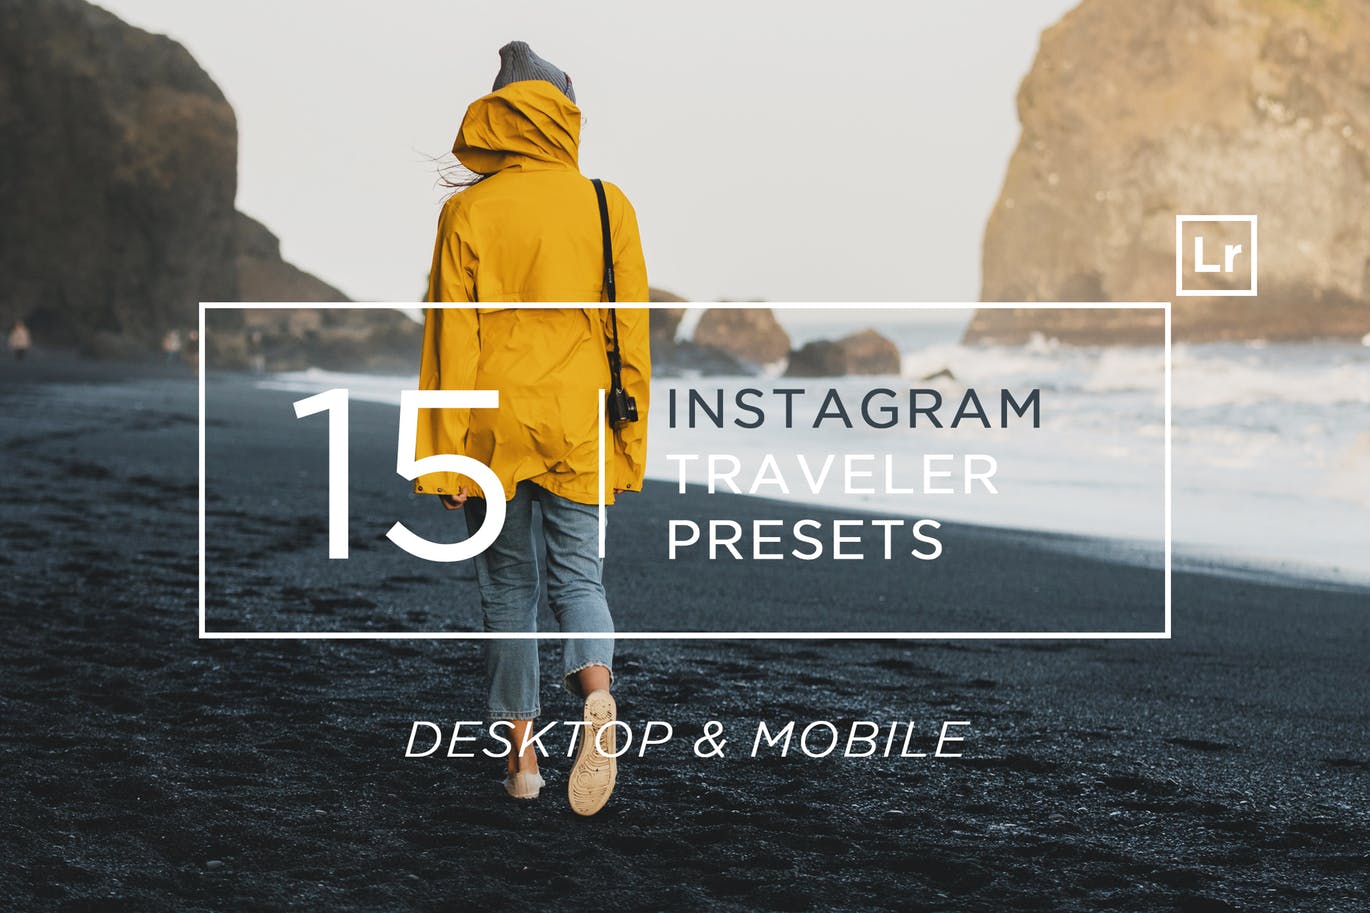 15款Instagram社交旅行照片滤镜风格非凡图库精选LR预设 15 Instagram Traveler Ligtroom Presets + Mobile插图